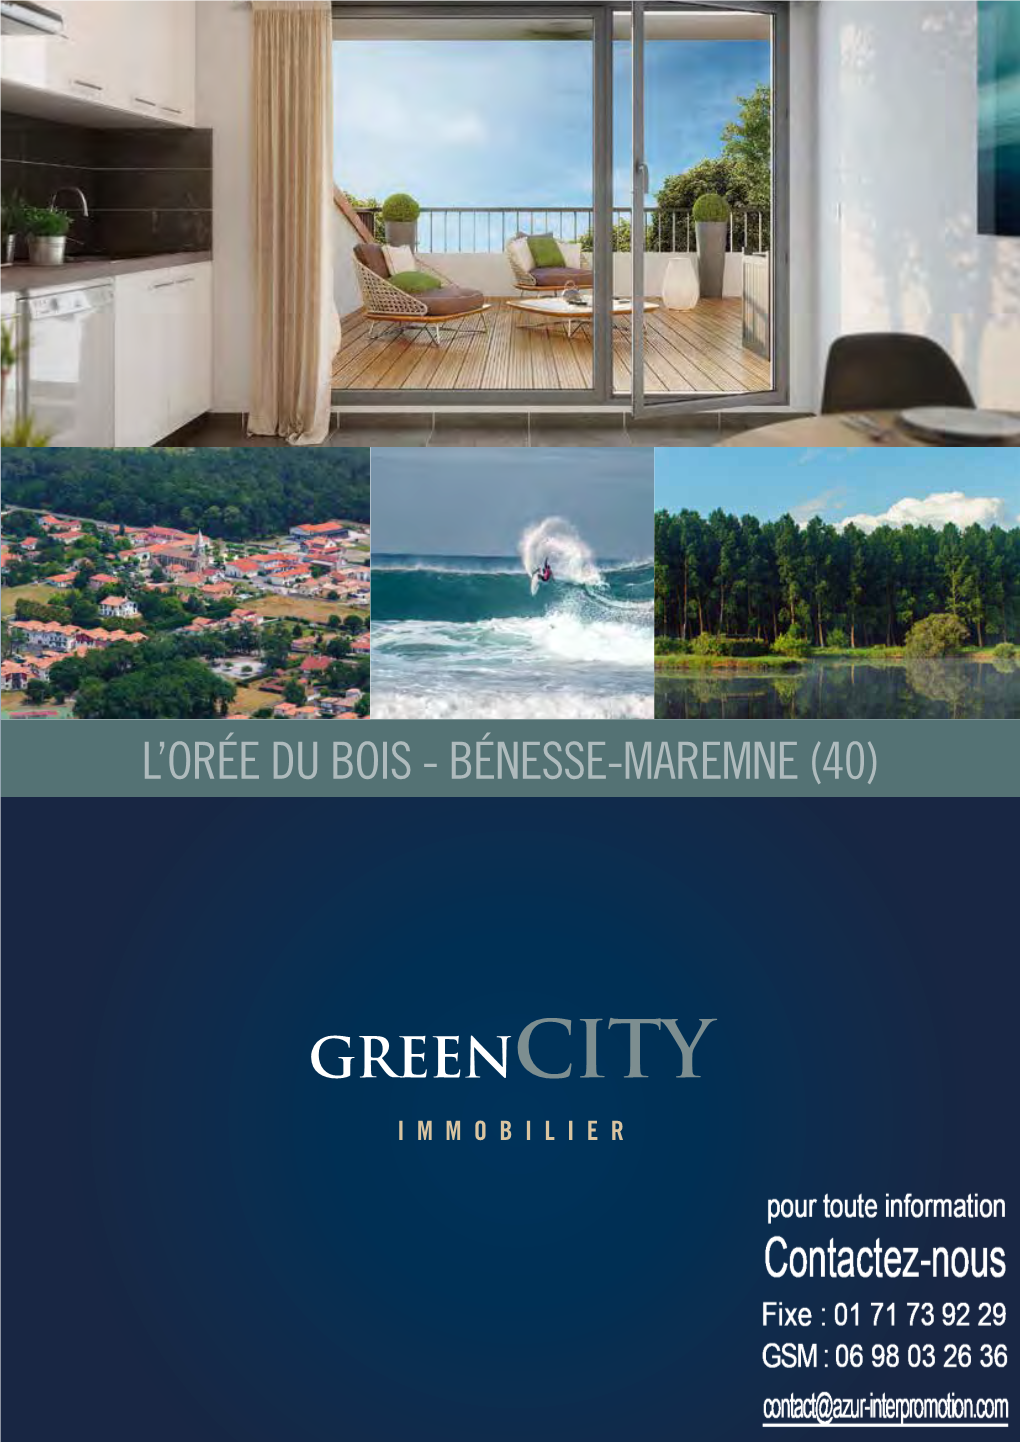 Bénesse-Maremne Greencity